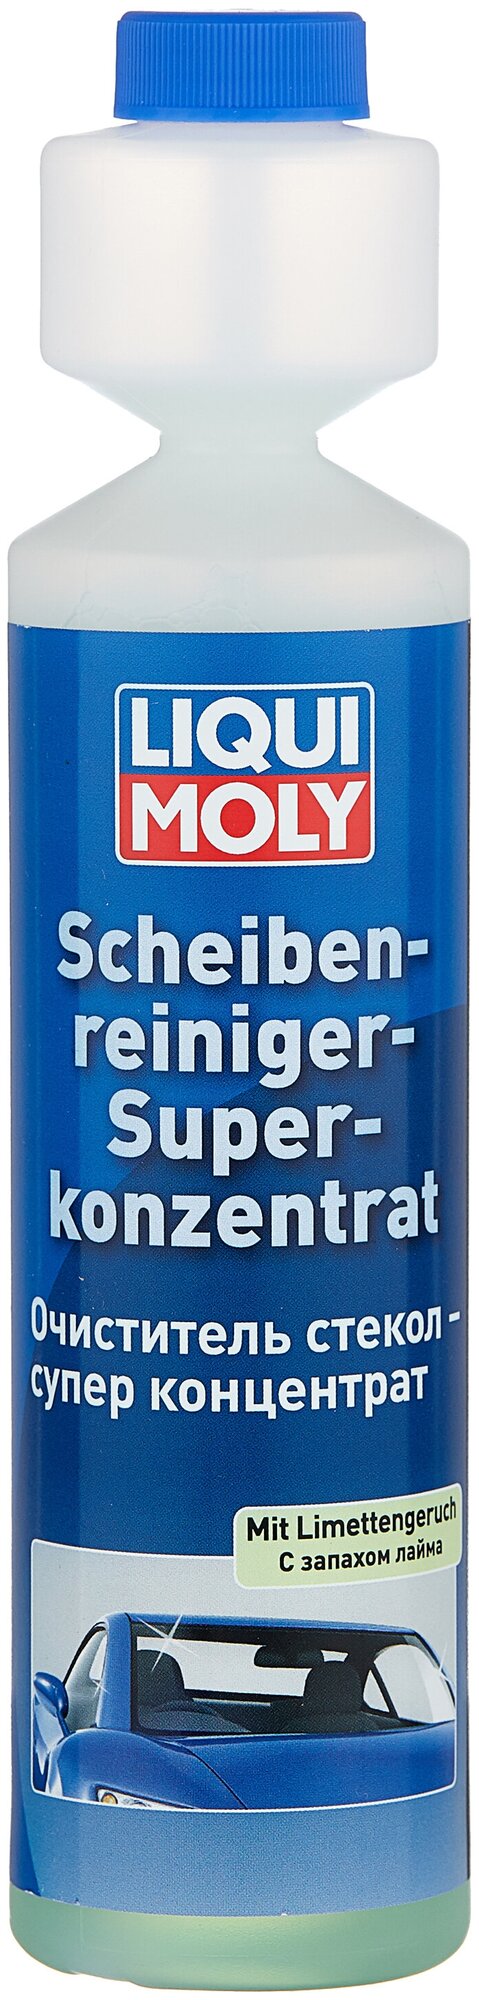 Очиститель стекол суперконцентрат Liqui Moly Scheiben-Reiniger-Super Konzentrat Limette, лайм, 0.250